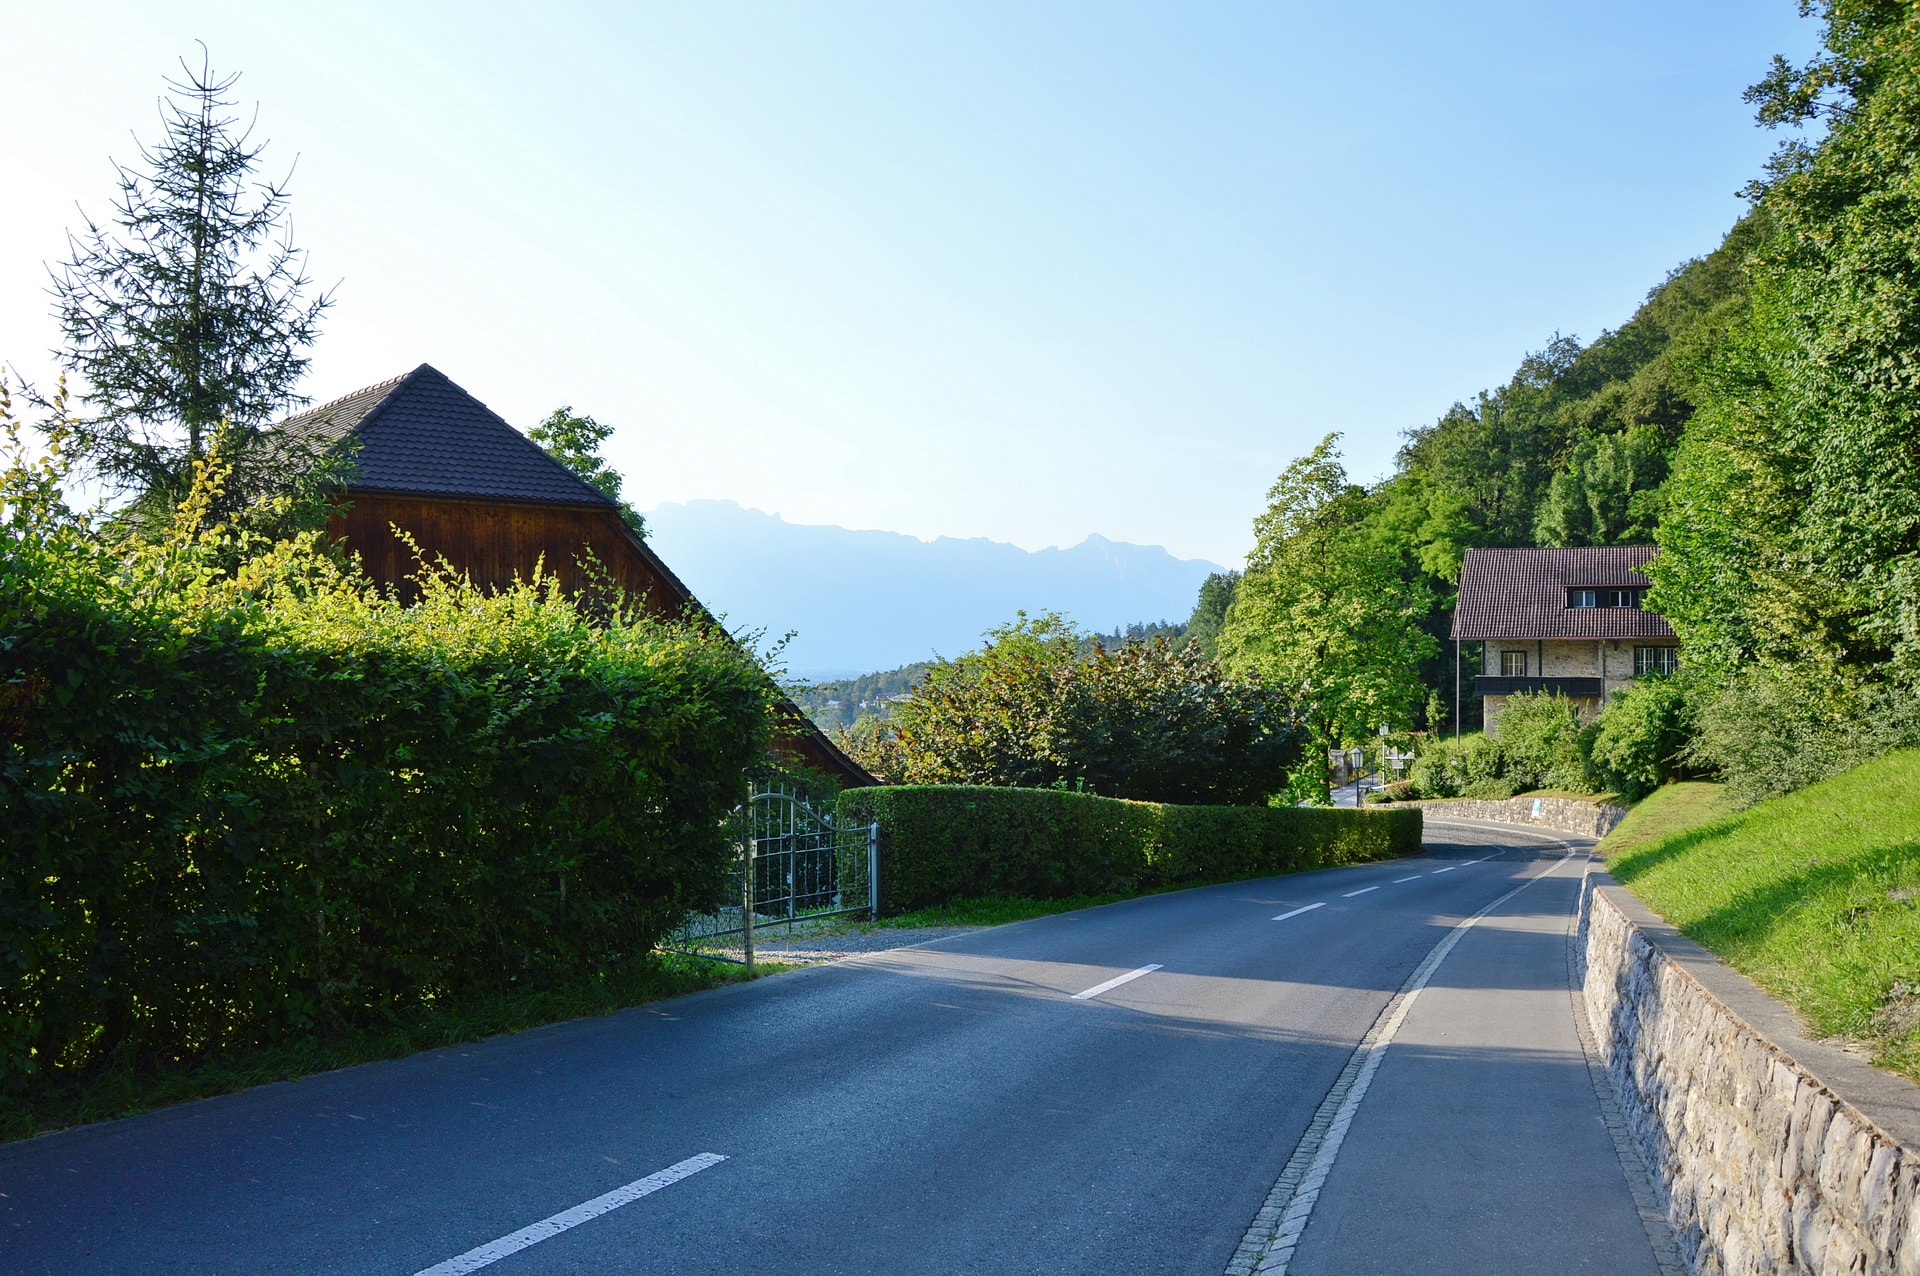 Roads in Liechtenstein are all in great shape but quite narrow